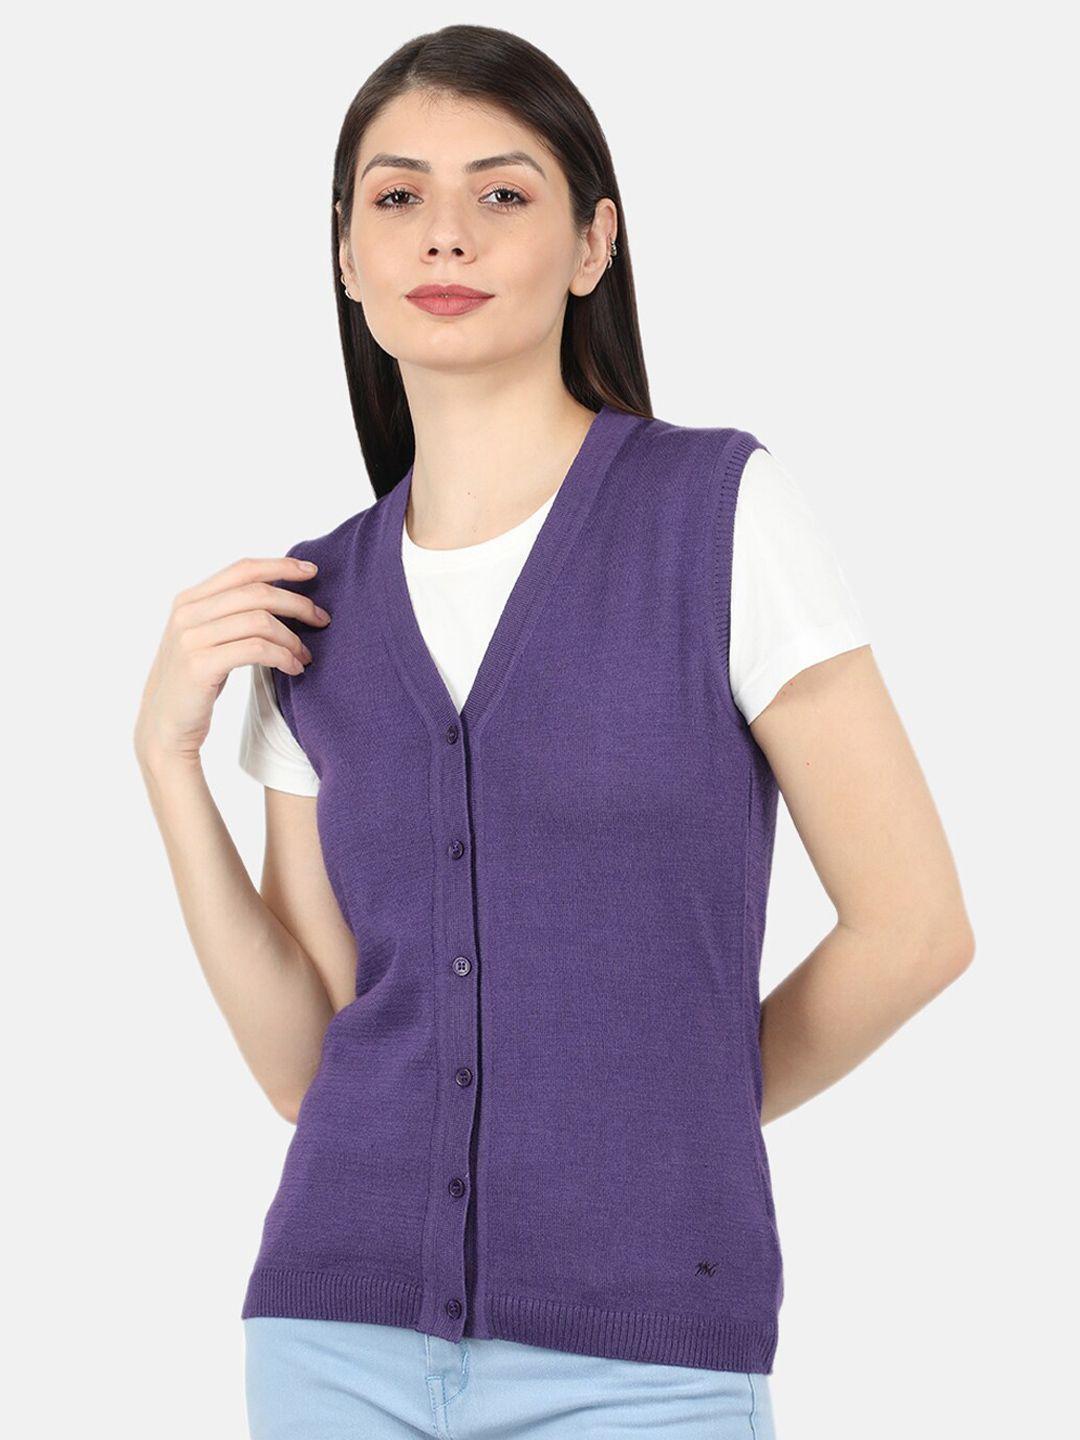 monte carlo women purple solid sleeveless cardigan